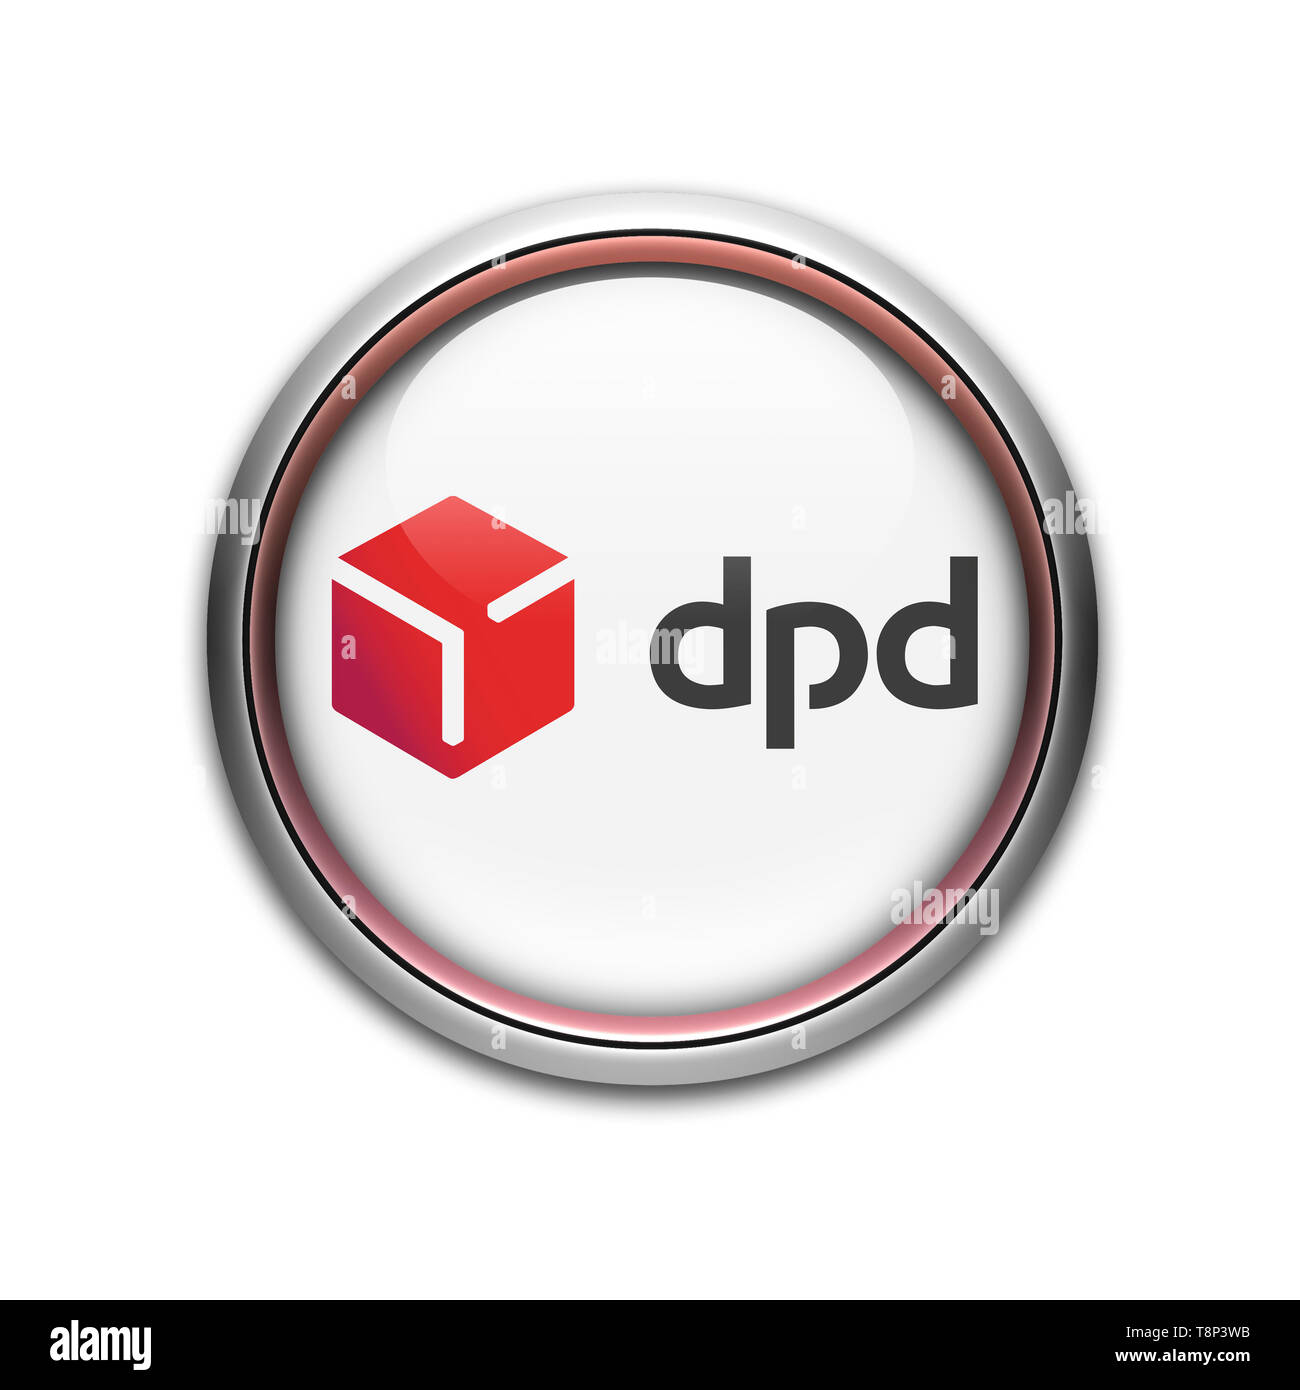 DPD logo Stock Photo - Alamy